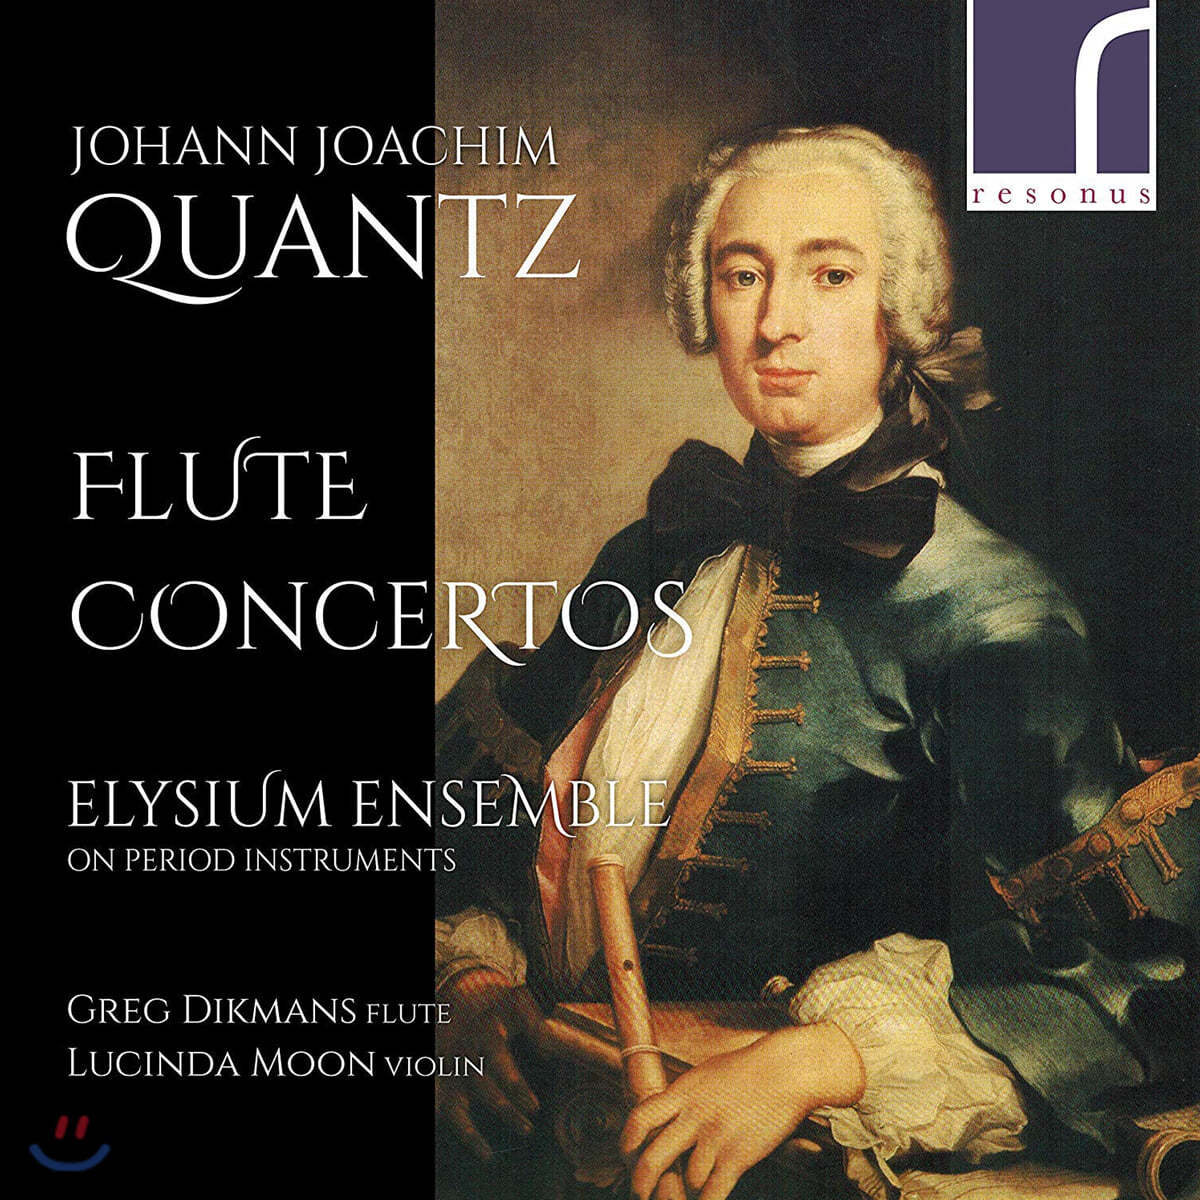 Elysium Ensemble 요한 크반츠: 플루트 협주곡 (Johann Joachim Quantz: Flute Concertos)